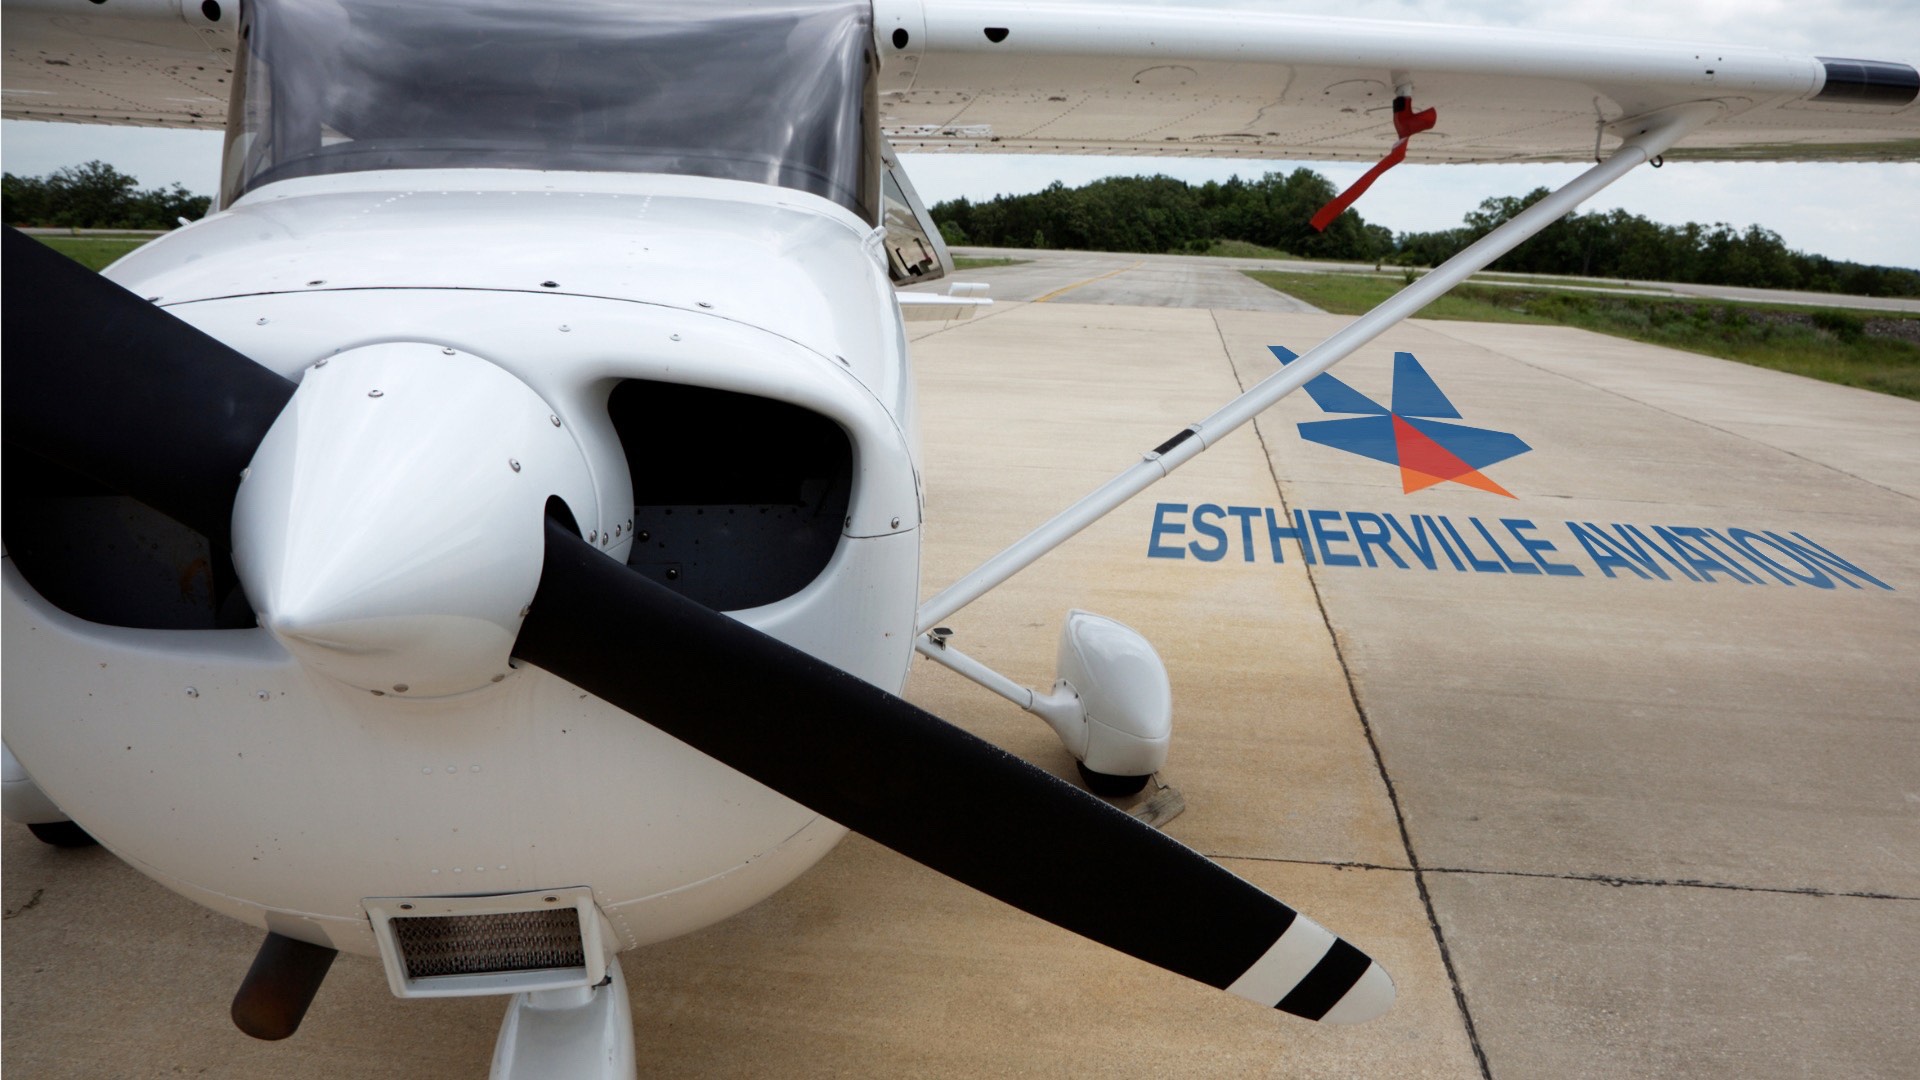 Estherville Aviation